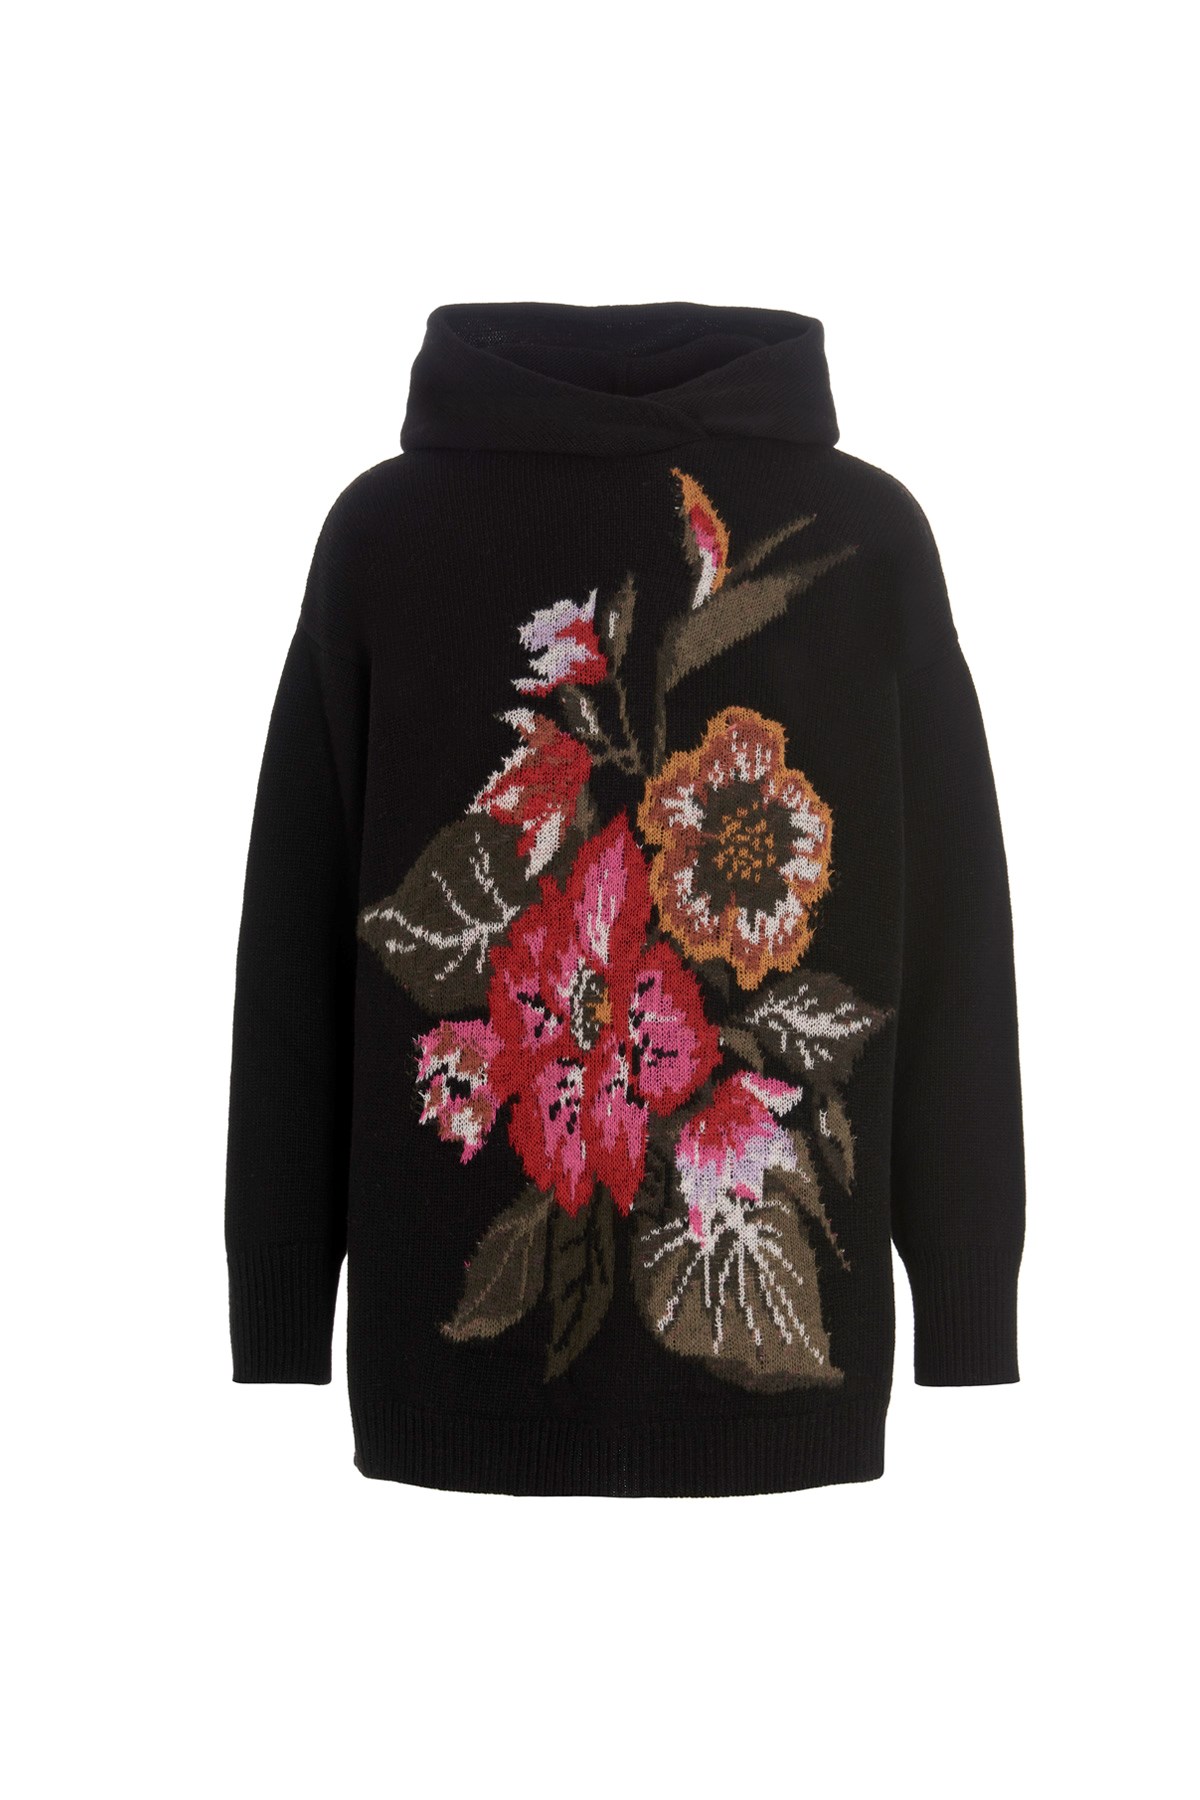 NUDE Floral Intarsia Sweater